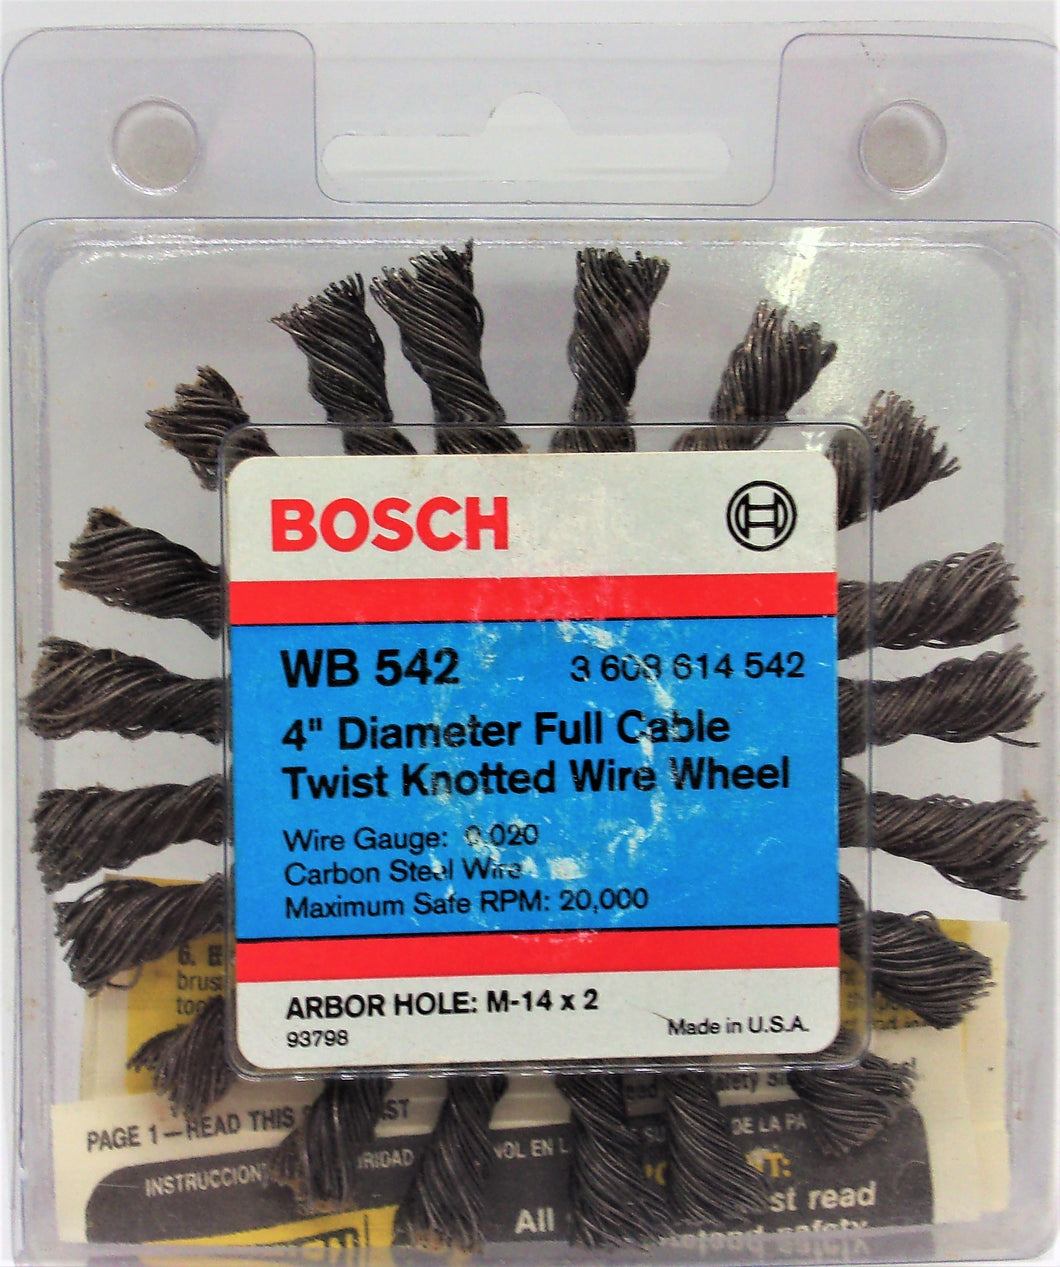 Bosch WB 542 4